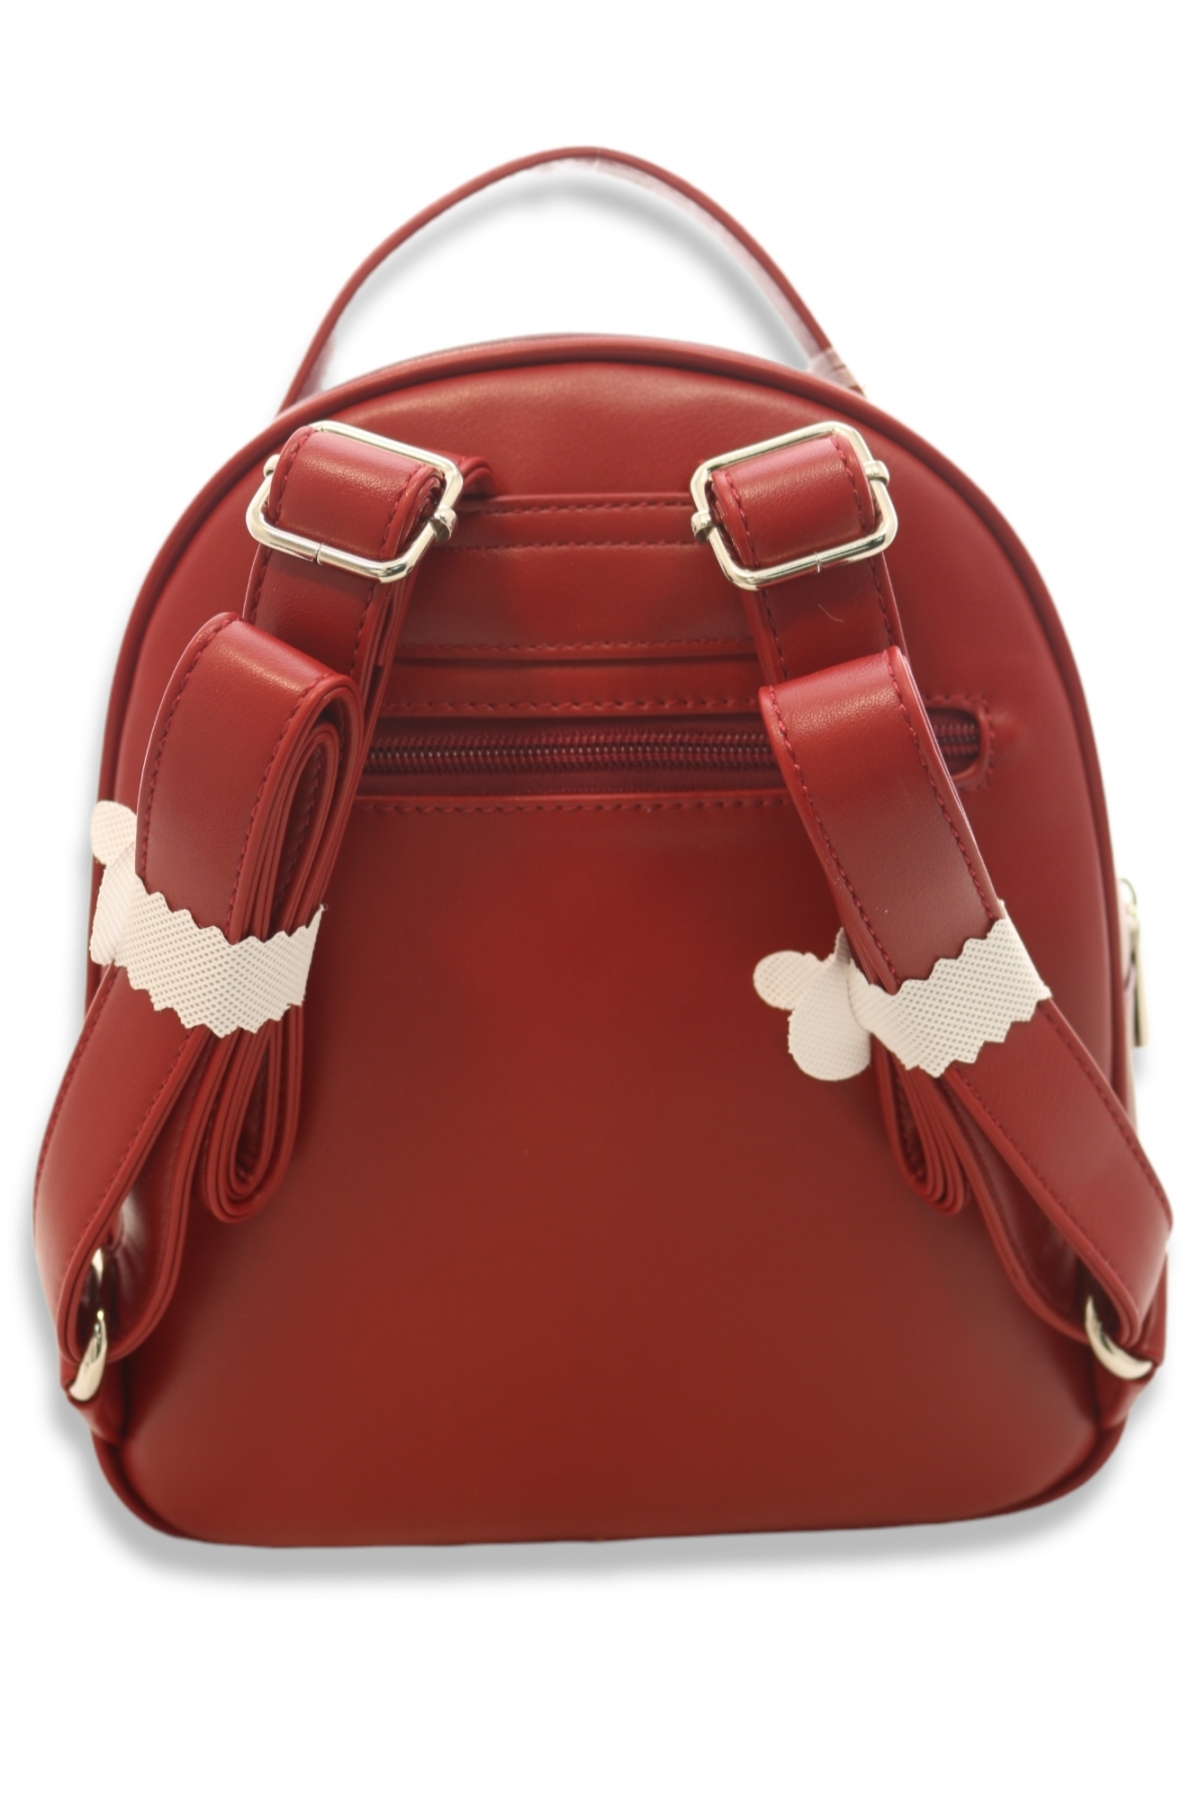 WHOLESALE David Jones Paris backpack HANDBAGS > Designer Handbags